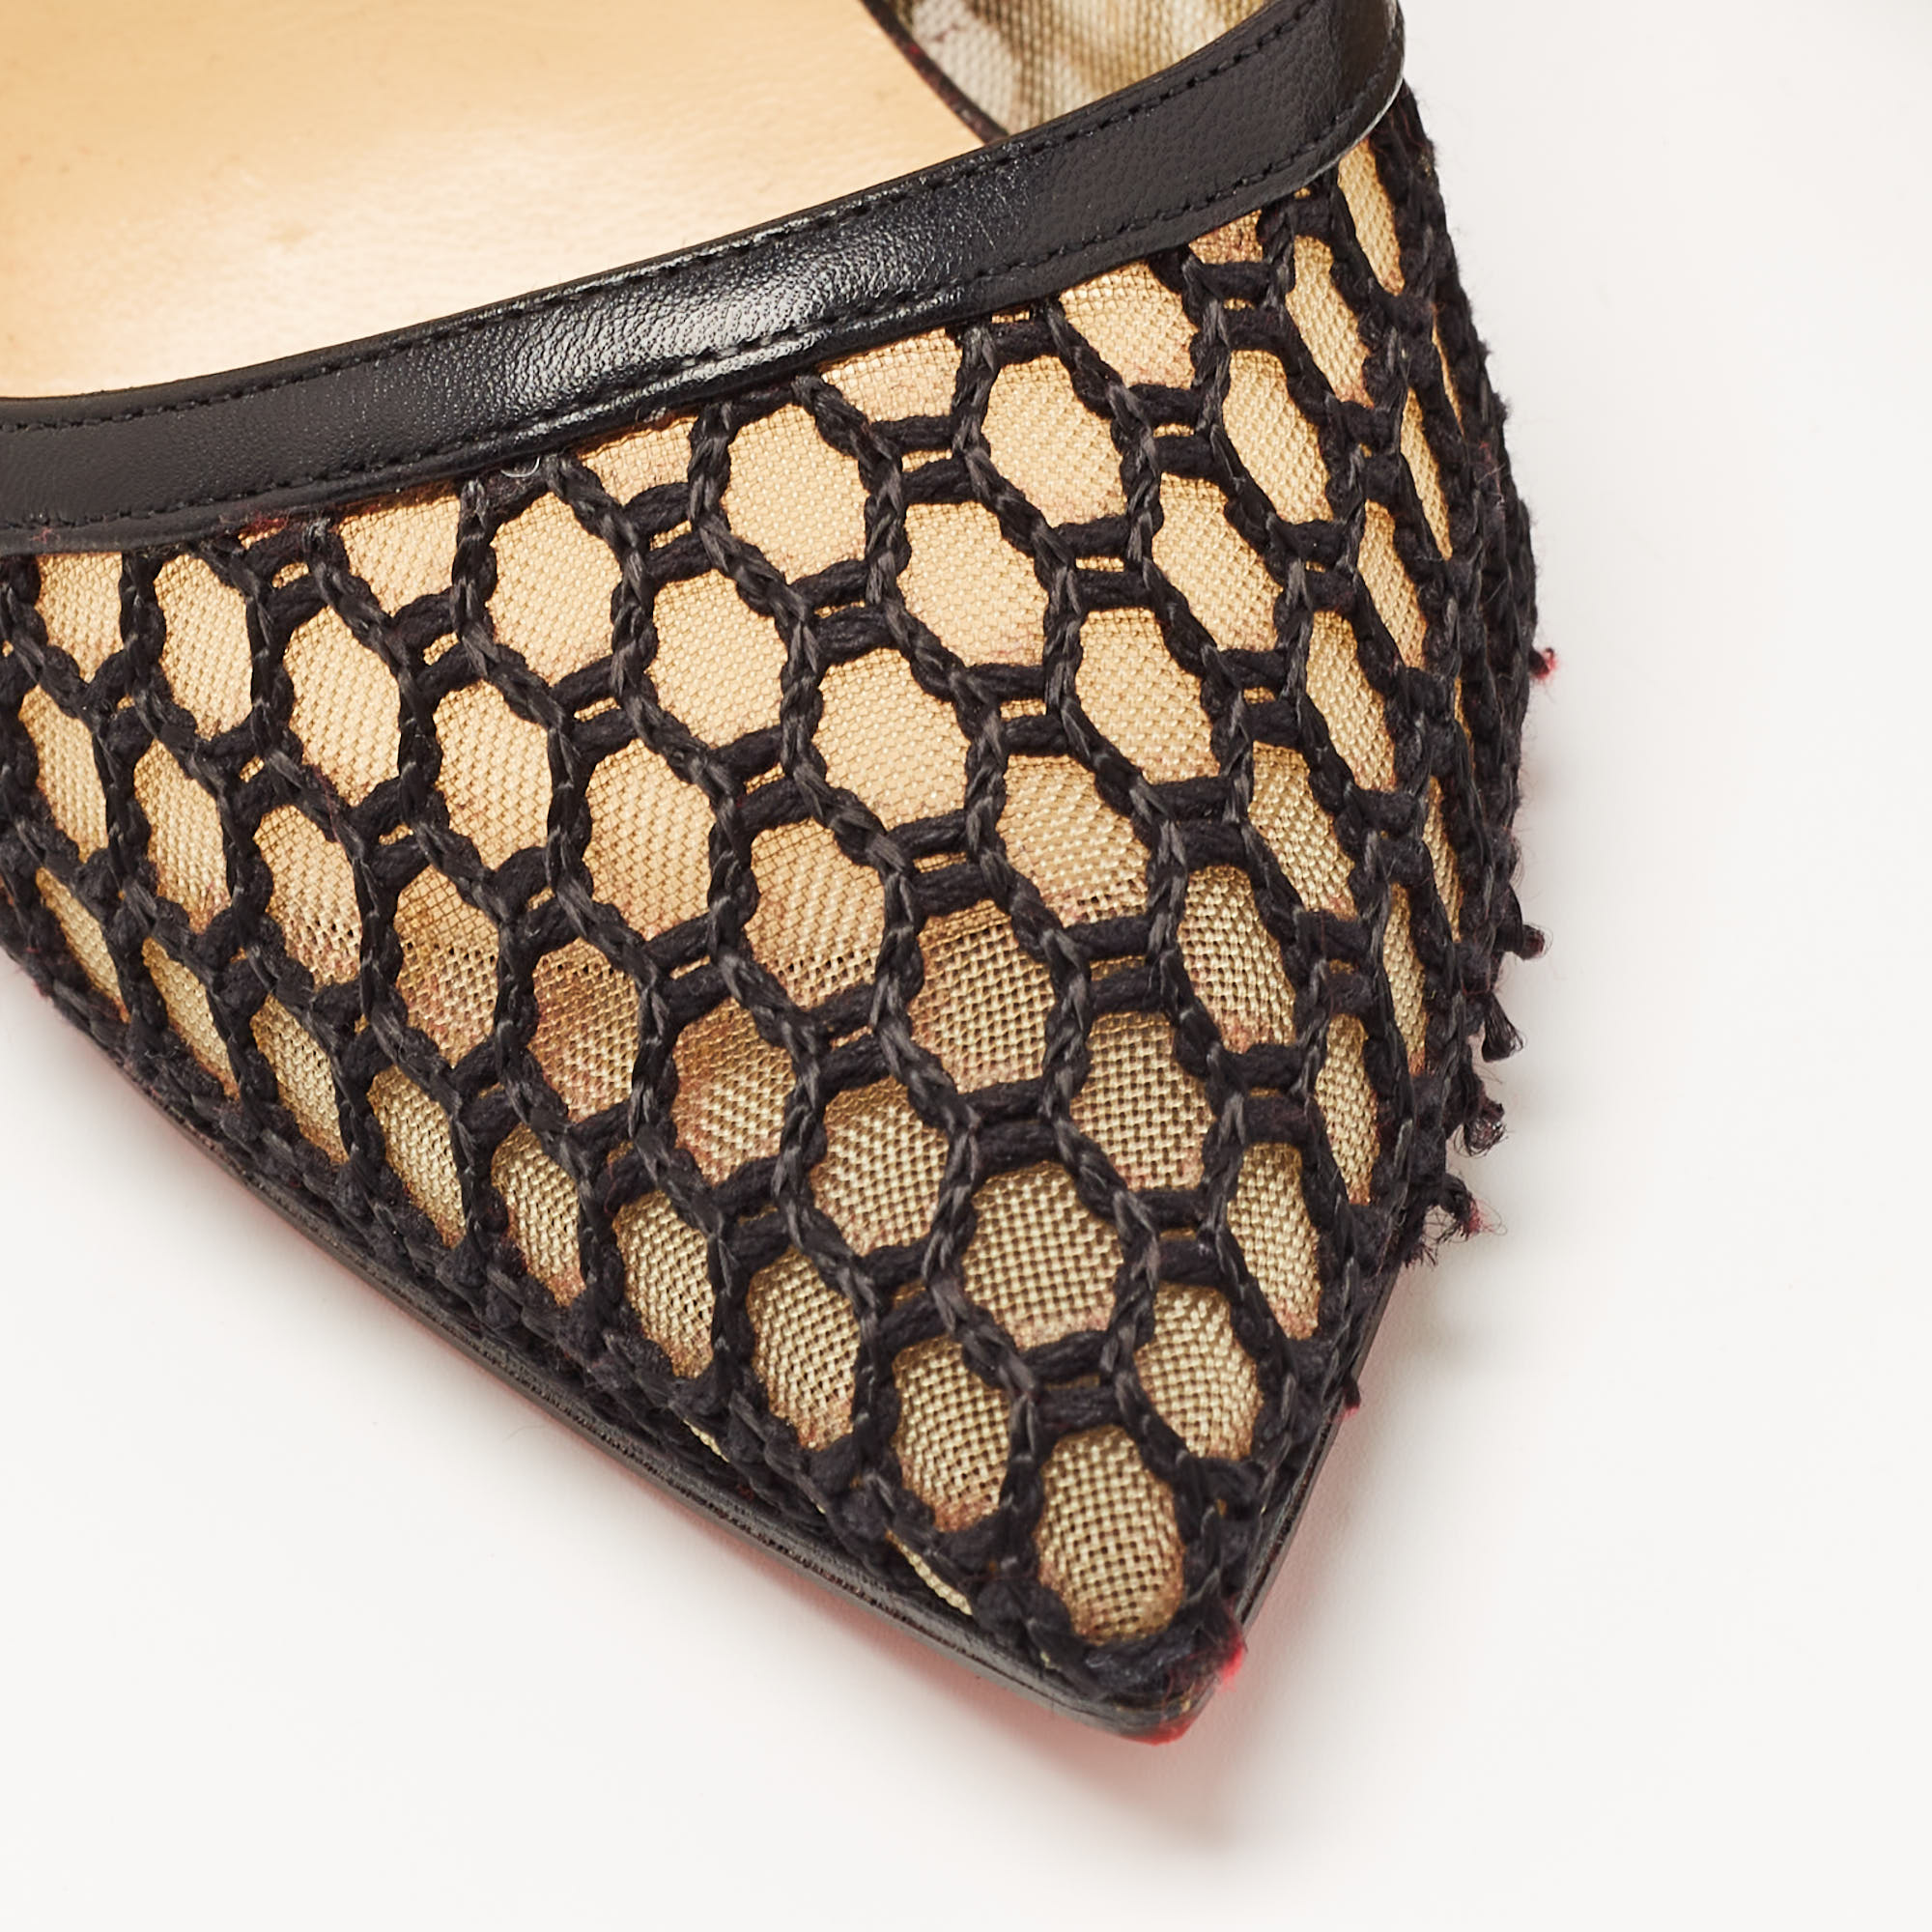 Christian Louboutin Black Leather And Mesh Miluna Slingback Pumps Size 37.5